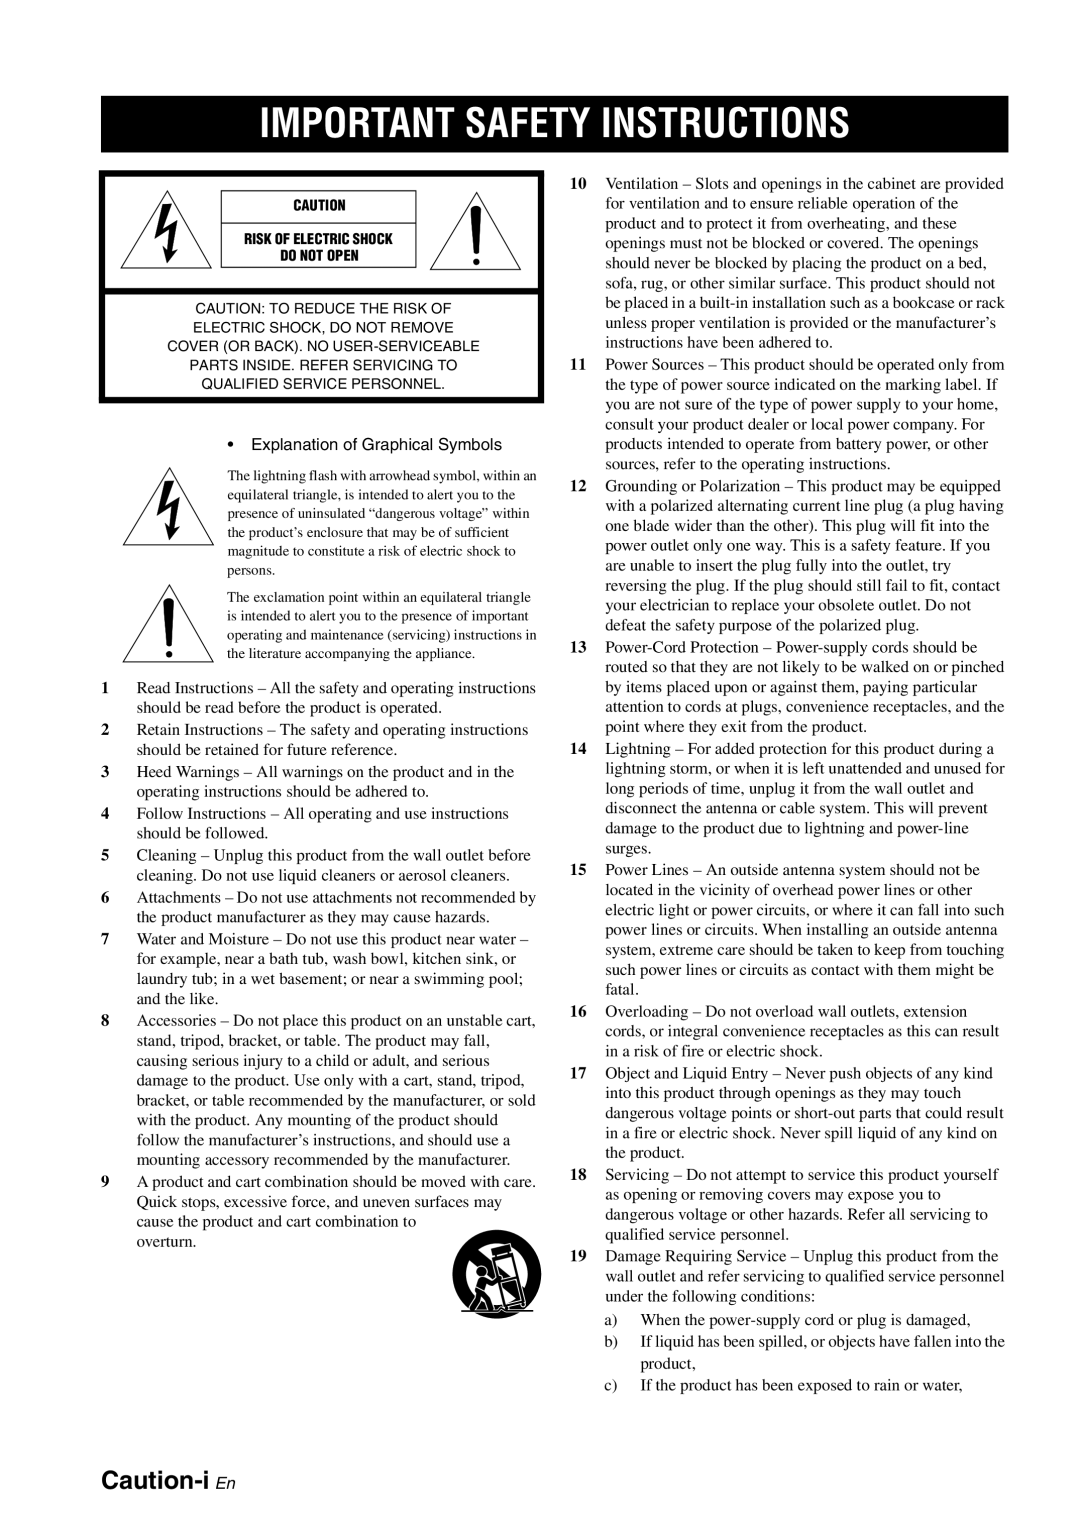 Yamaha RX-V863 owner manual Caution-i En, Important Safety Instructions 